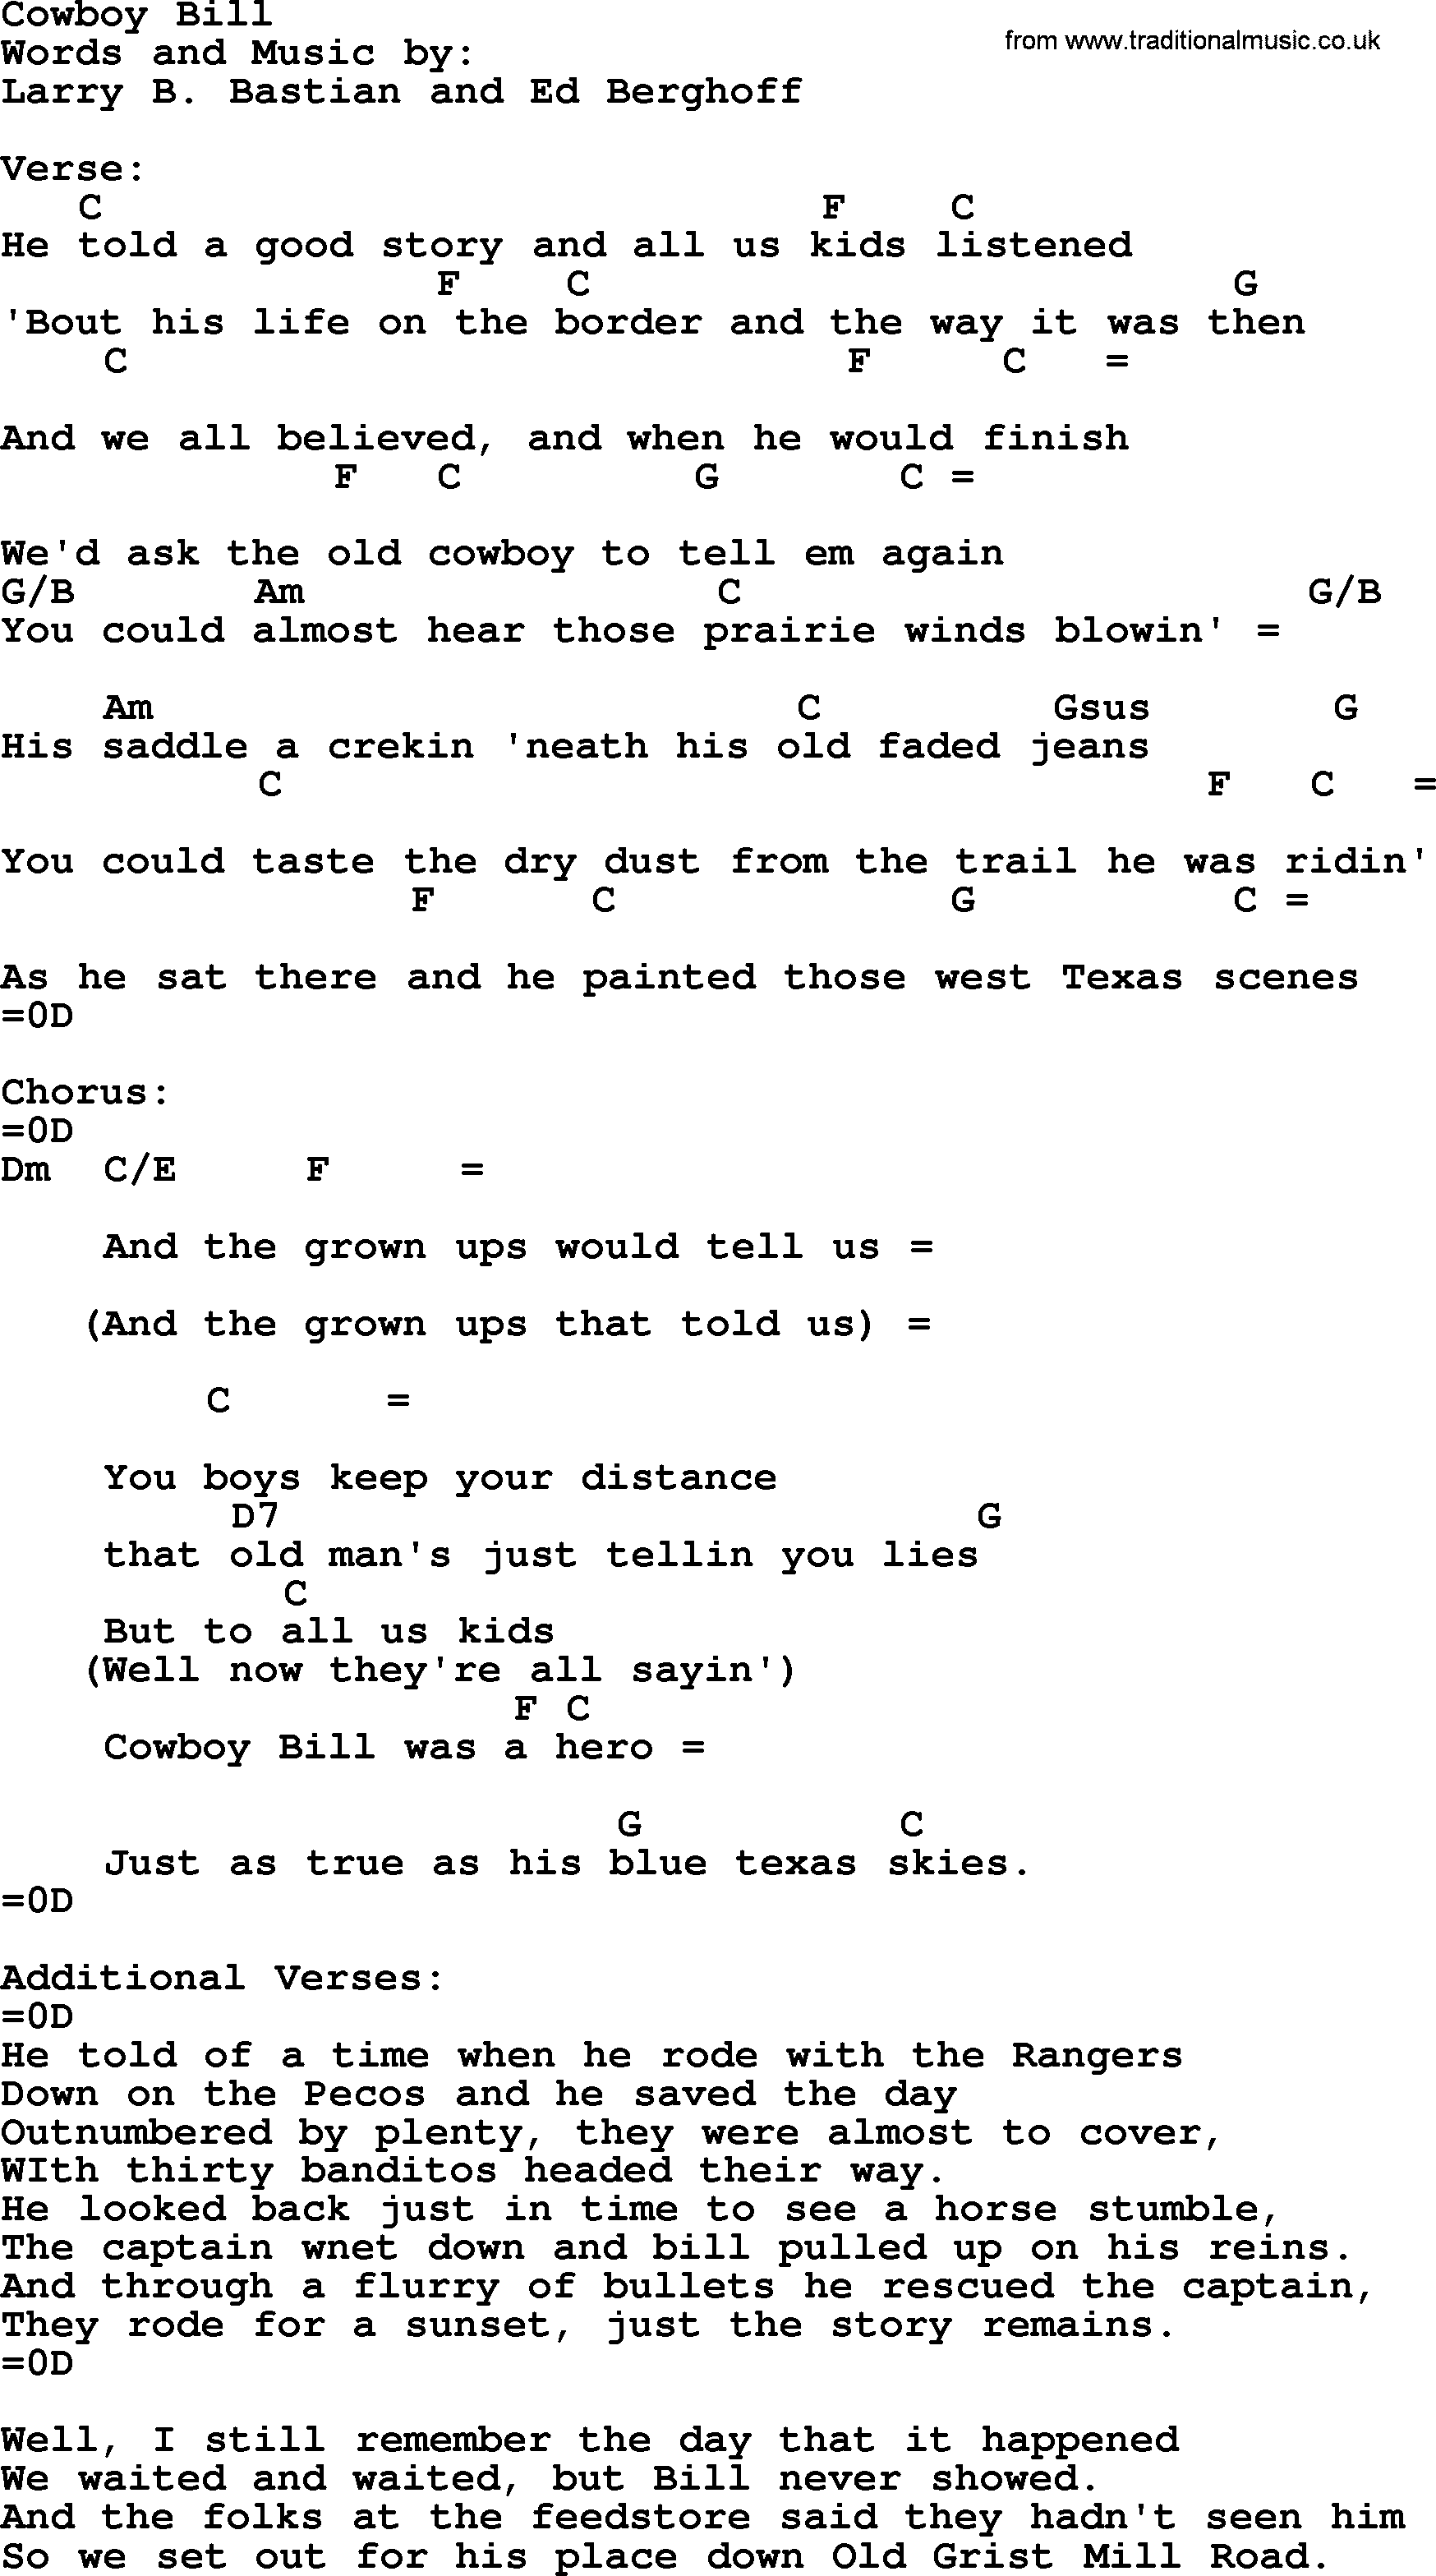 Garth Brooks song: Cowboy Bill, lyrics and chords